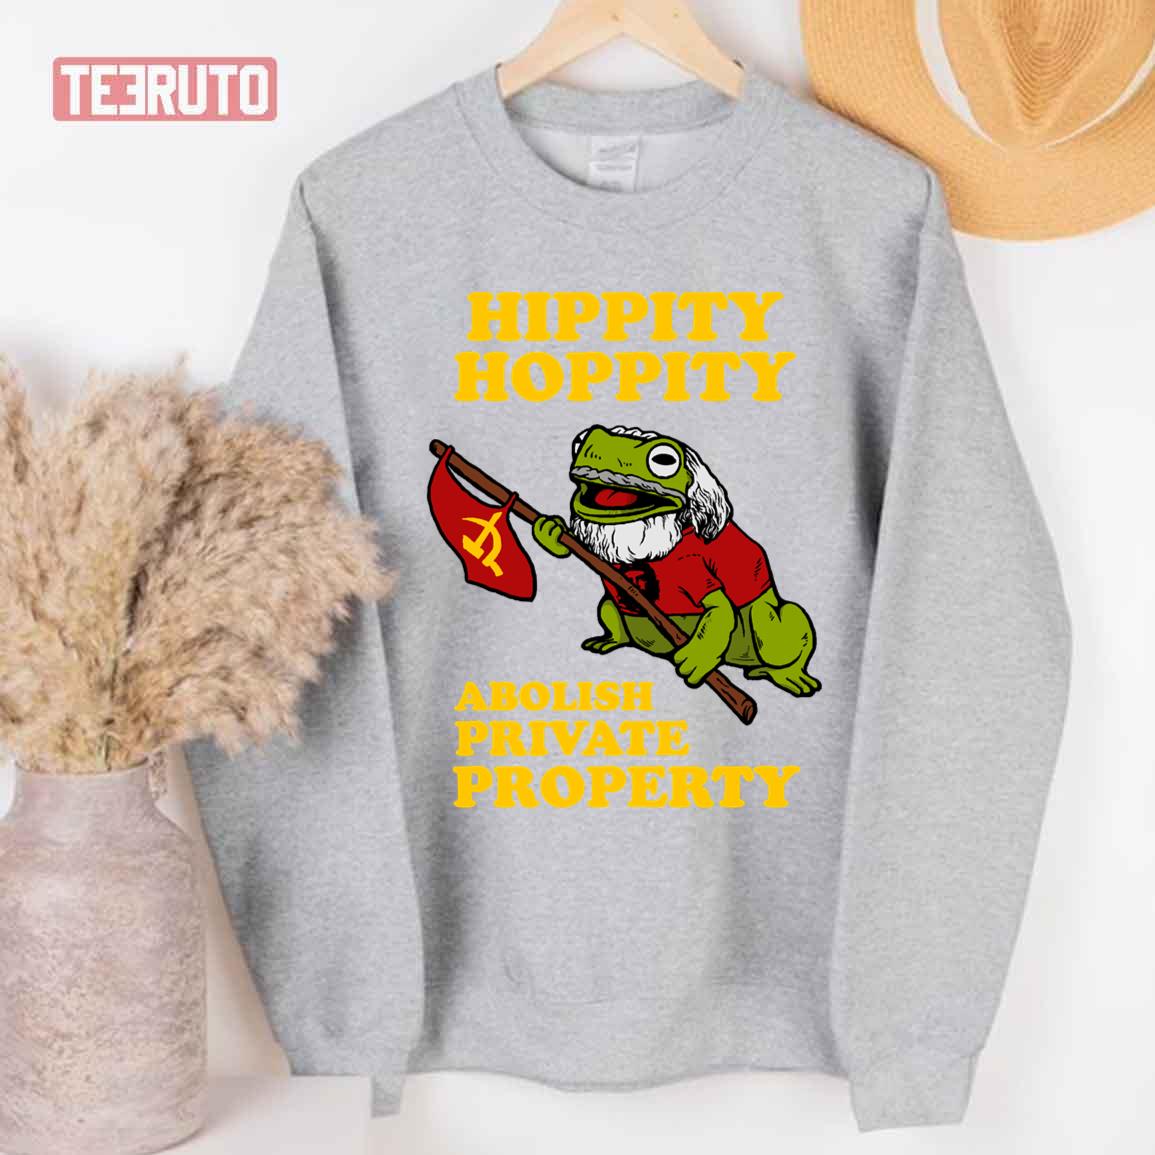 Hippity Hoppity Abolish Private Property Unisex T-Shirt